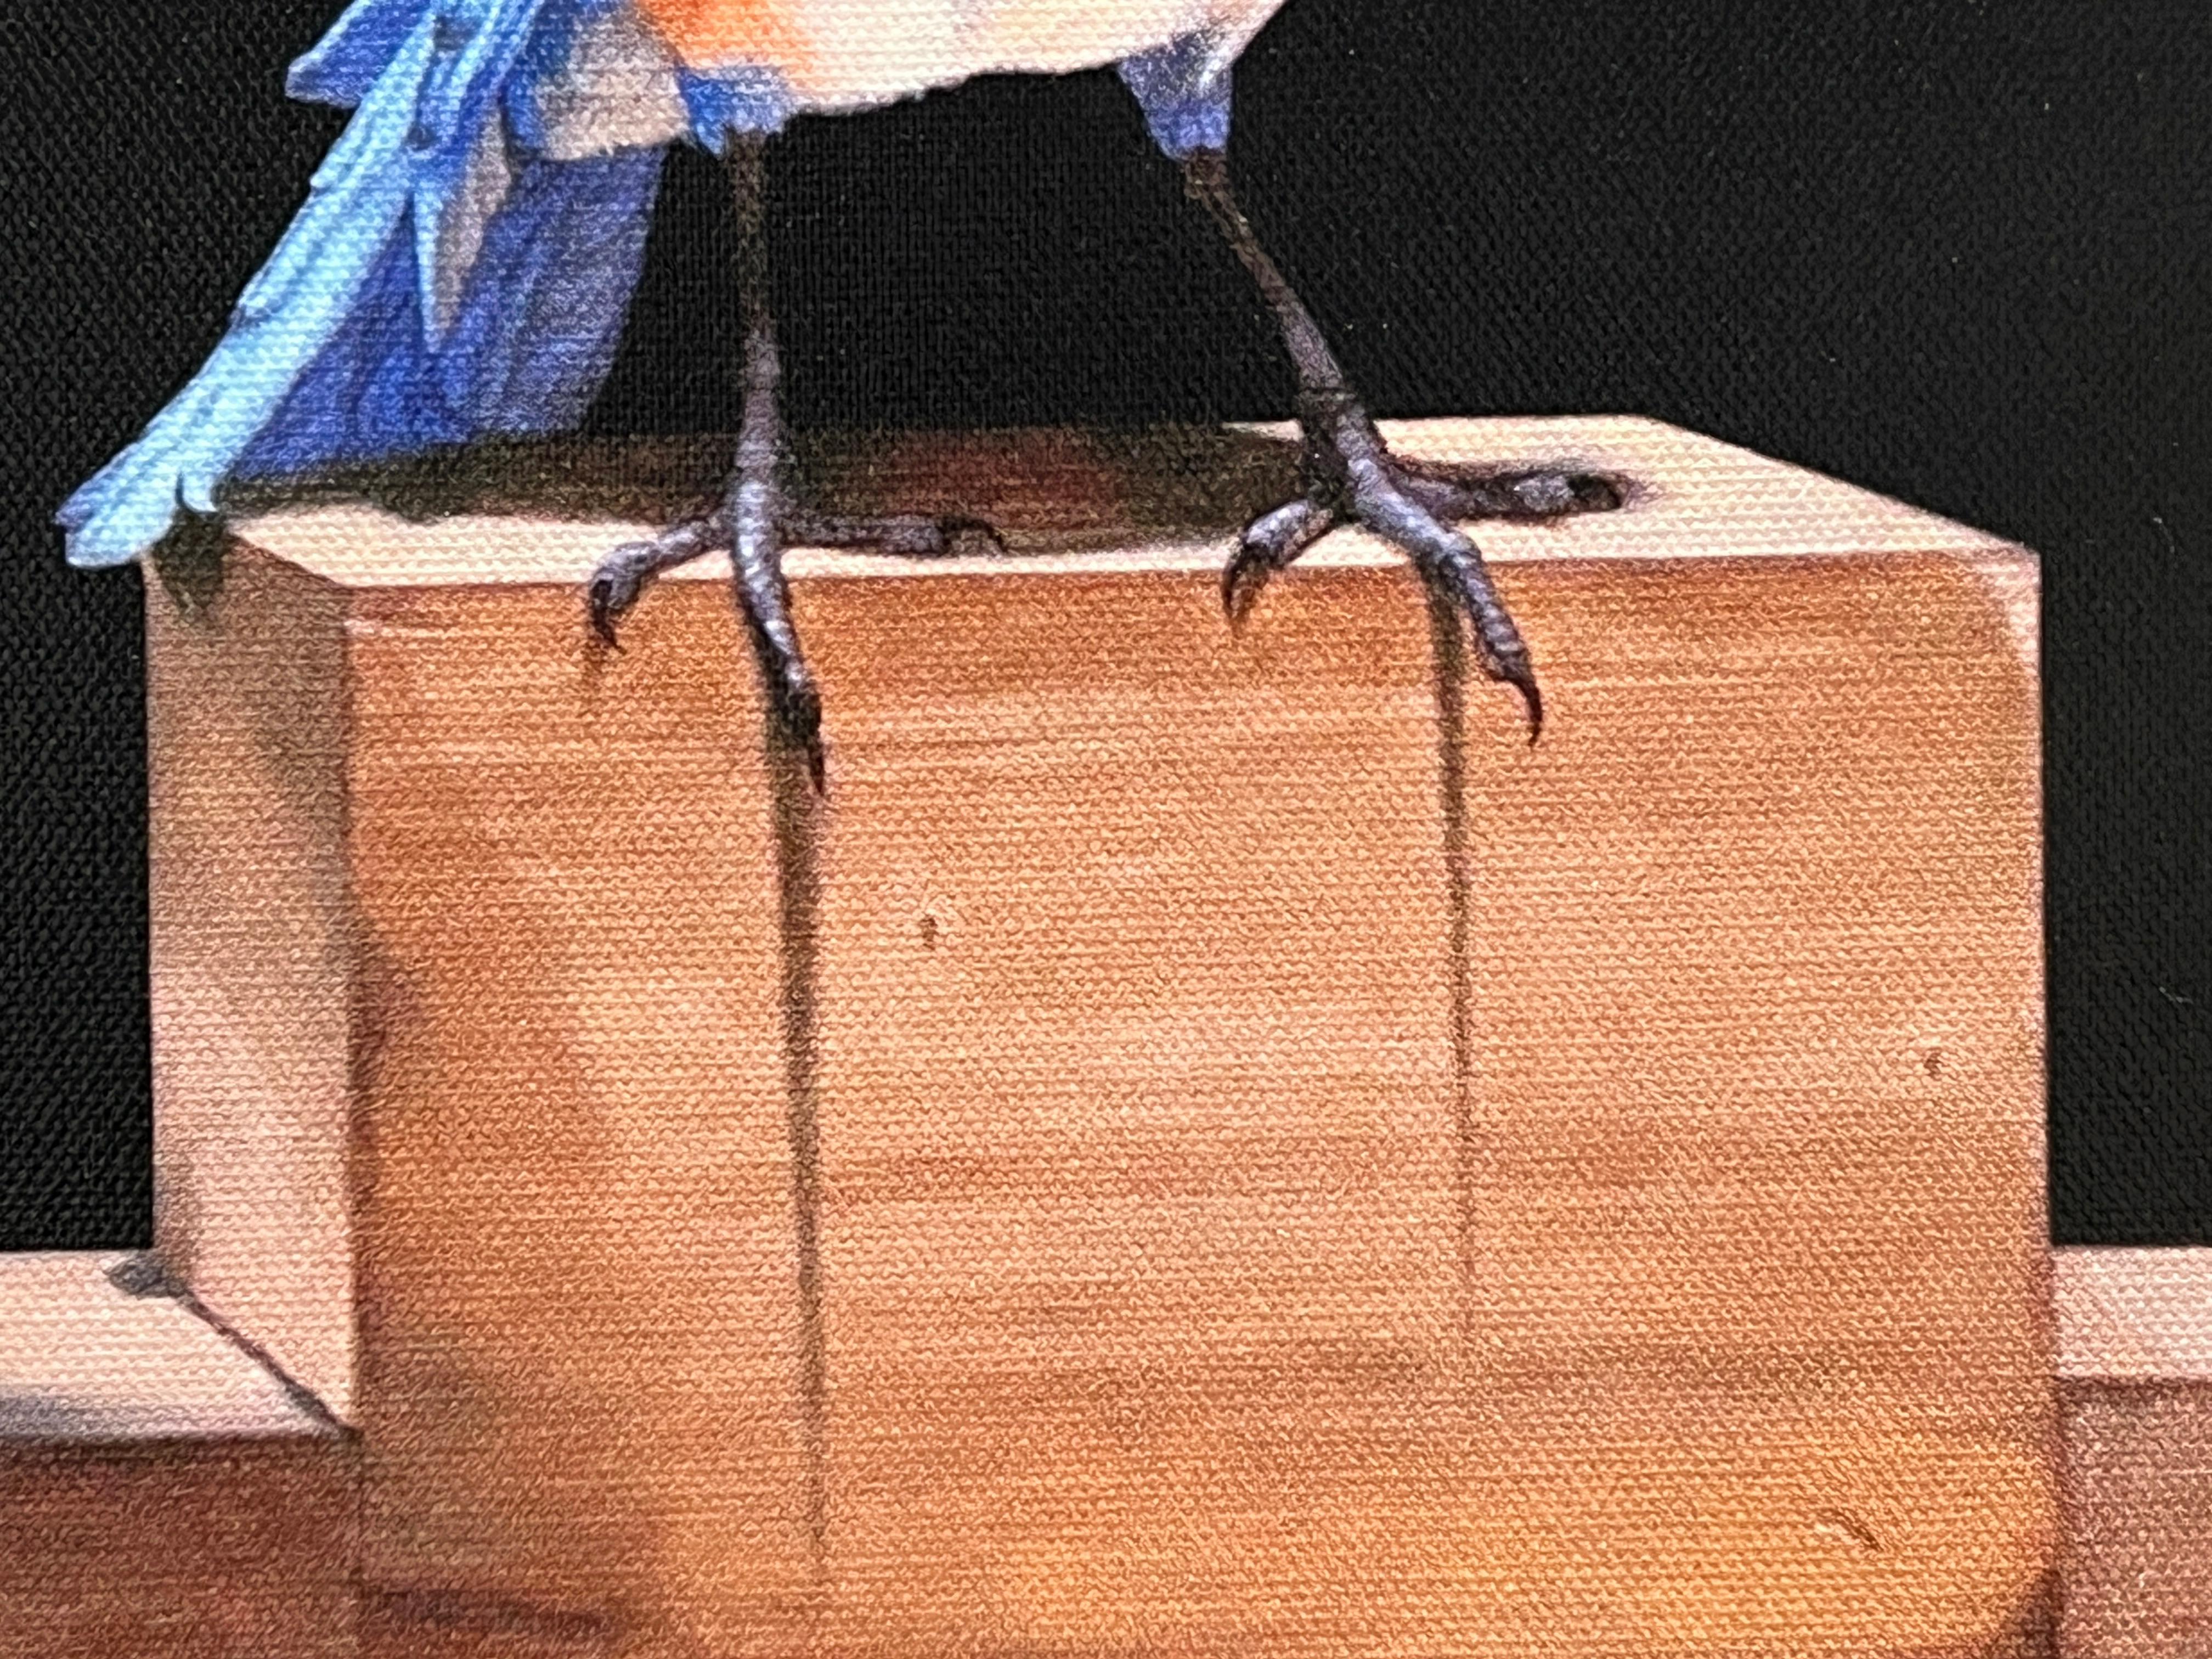 EASTERN BLUE BIRD - Contemporain / Photorealism / animal print en vente 2